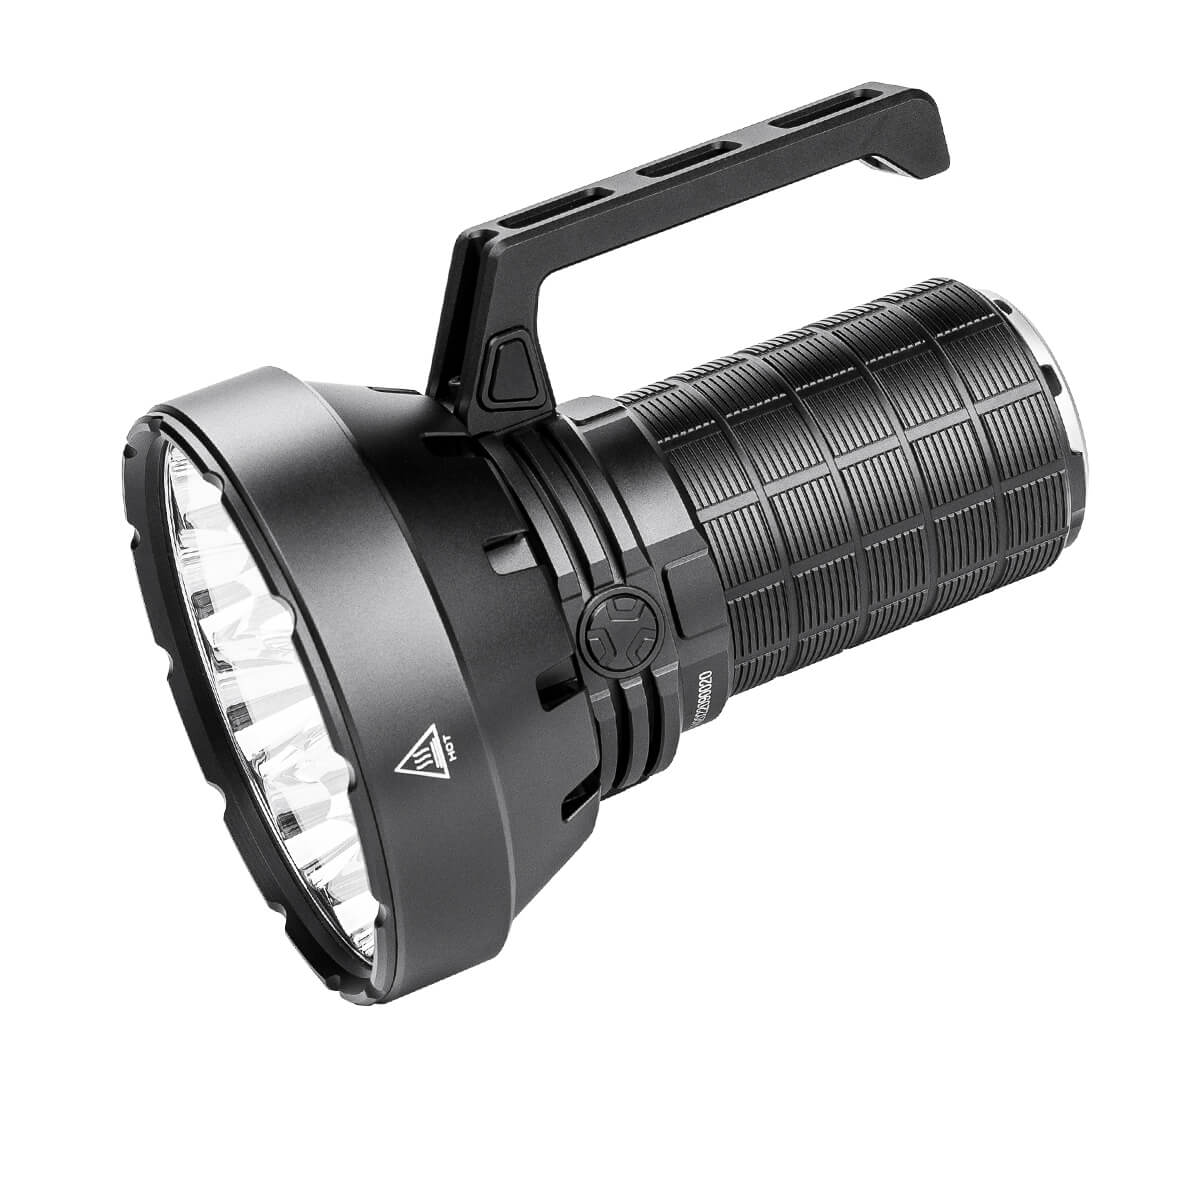 IMALENT SR16 55000 lumen flashlight